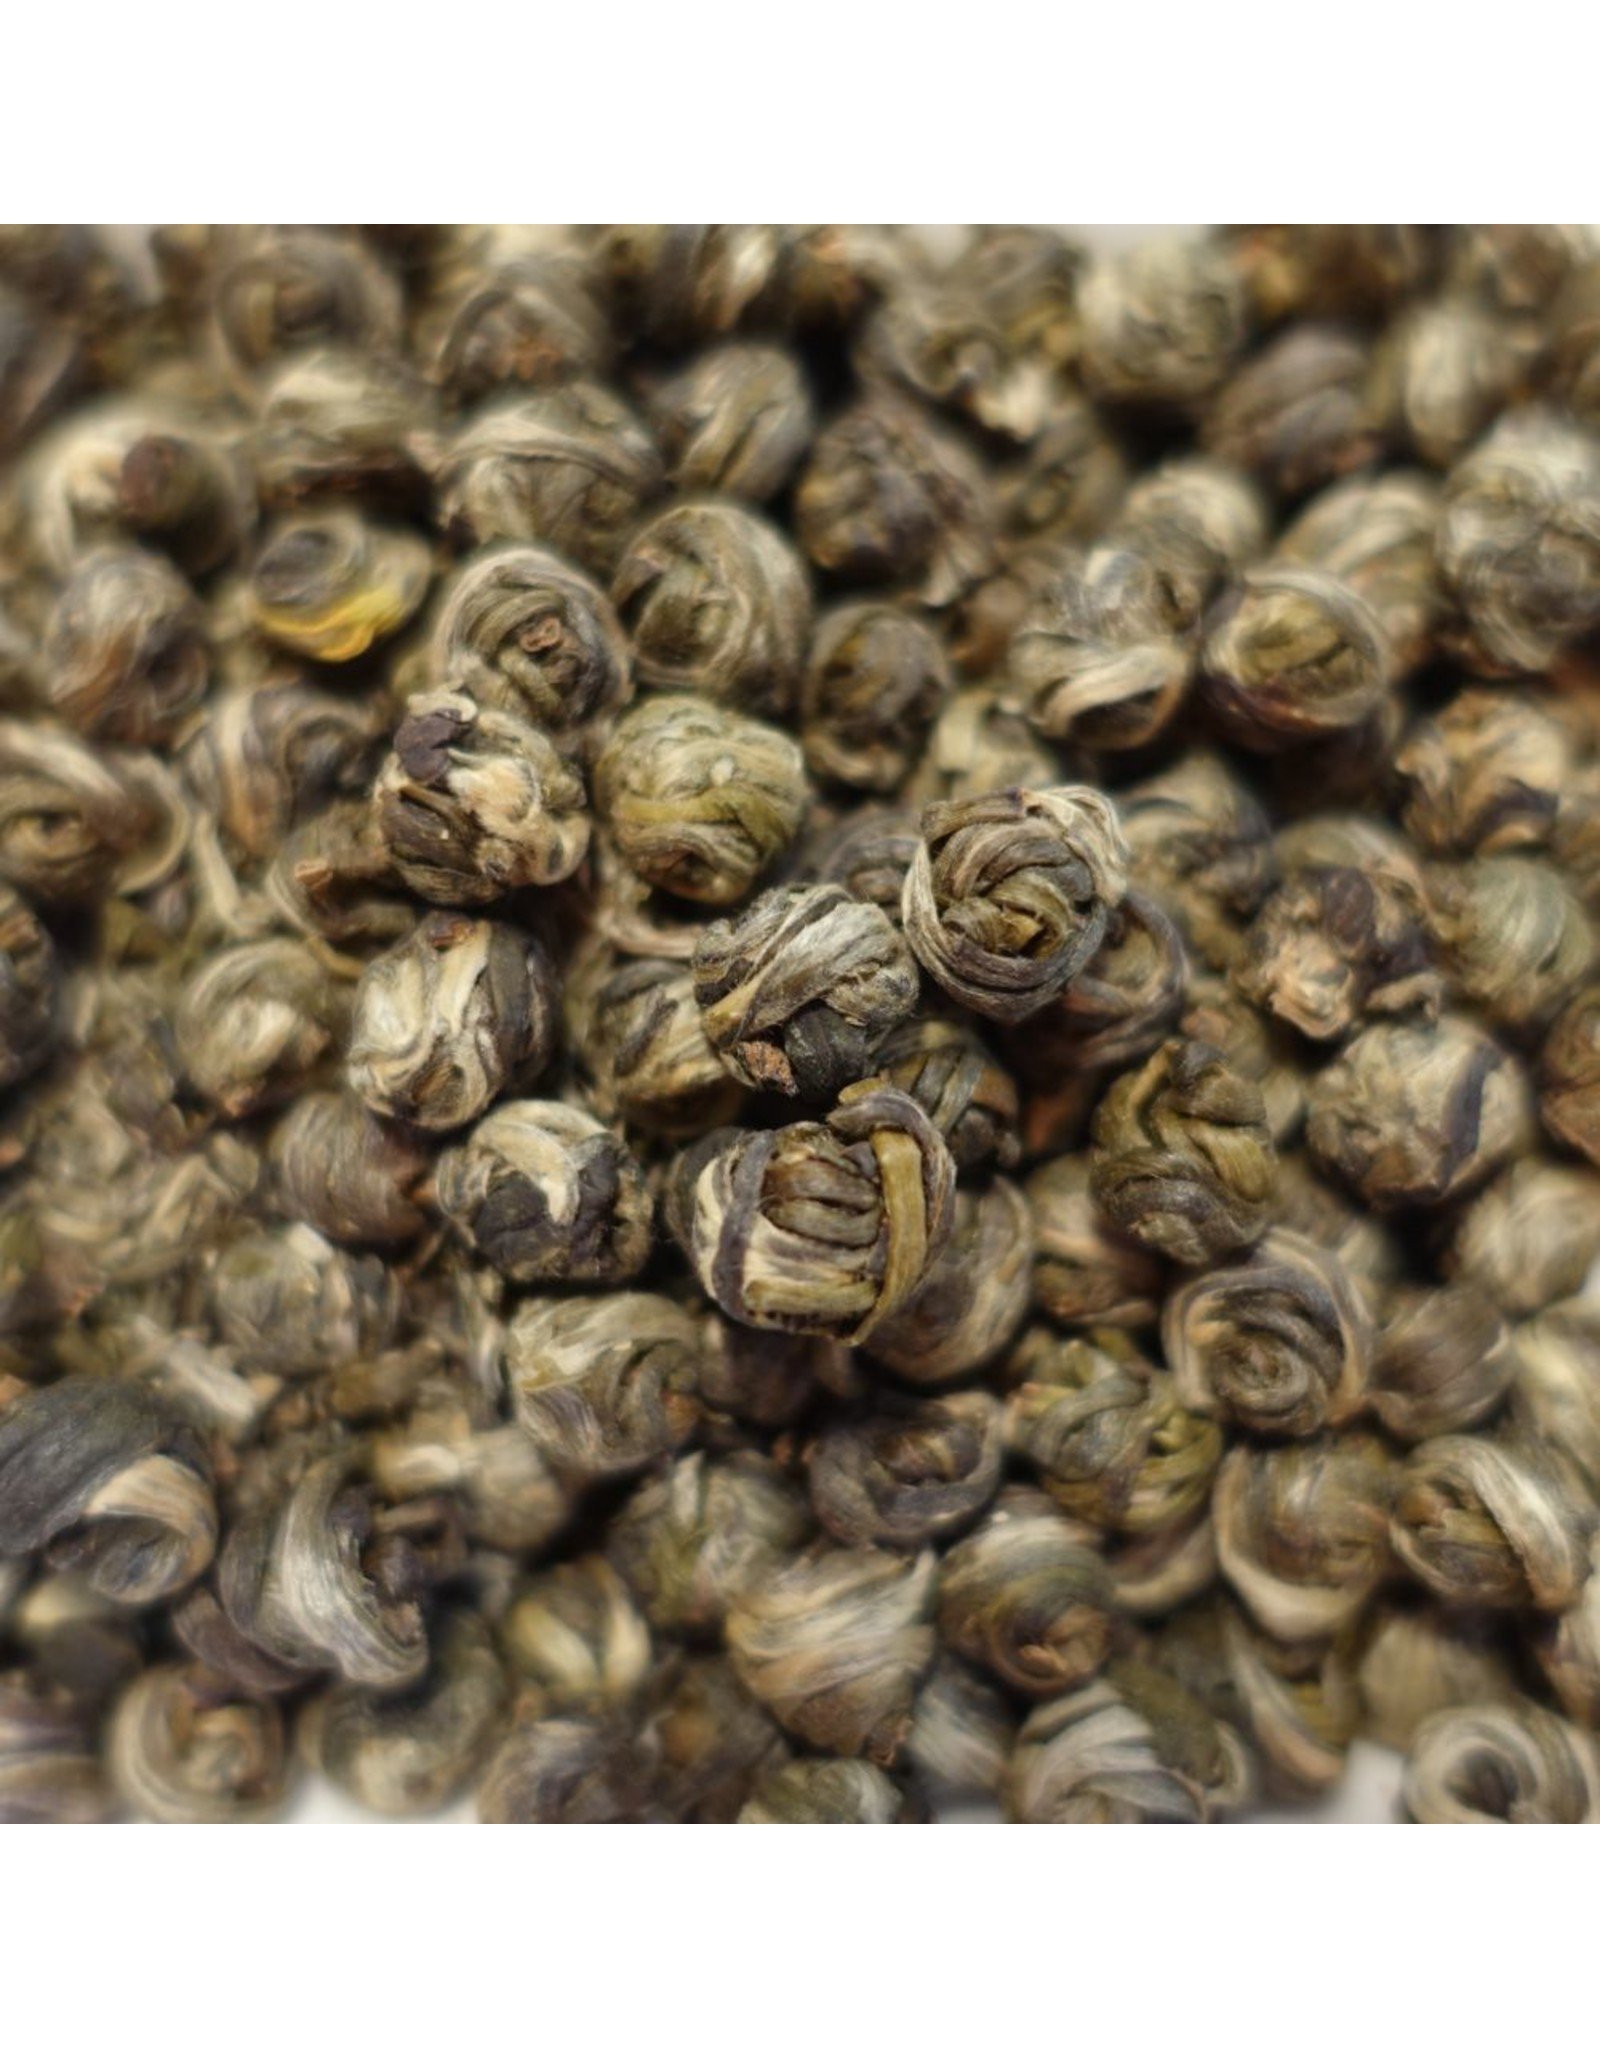 Tea from China Dragon Phoenix Jasmine Pearls, Organic Nonpareil